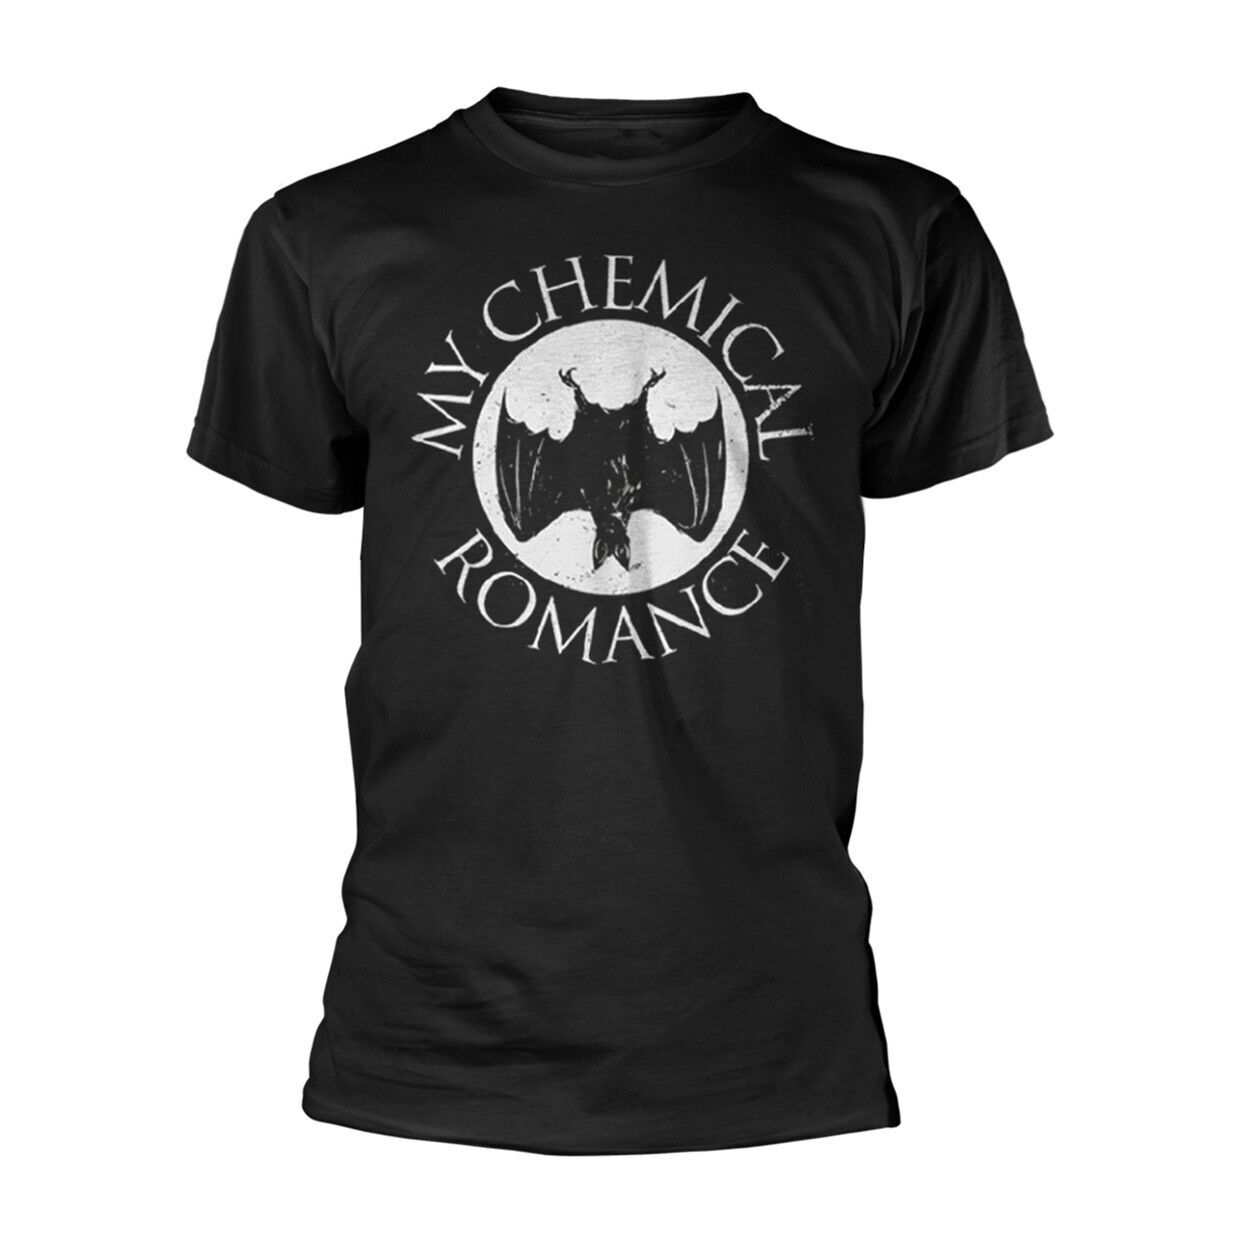 My chemical romance t. Футболка MCR. My Chemical Romance Shirt. Футболка с летучей мышью. My Chemical Romance футболка.